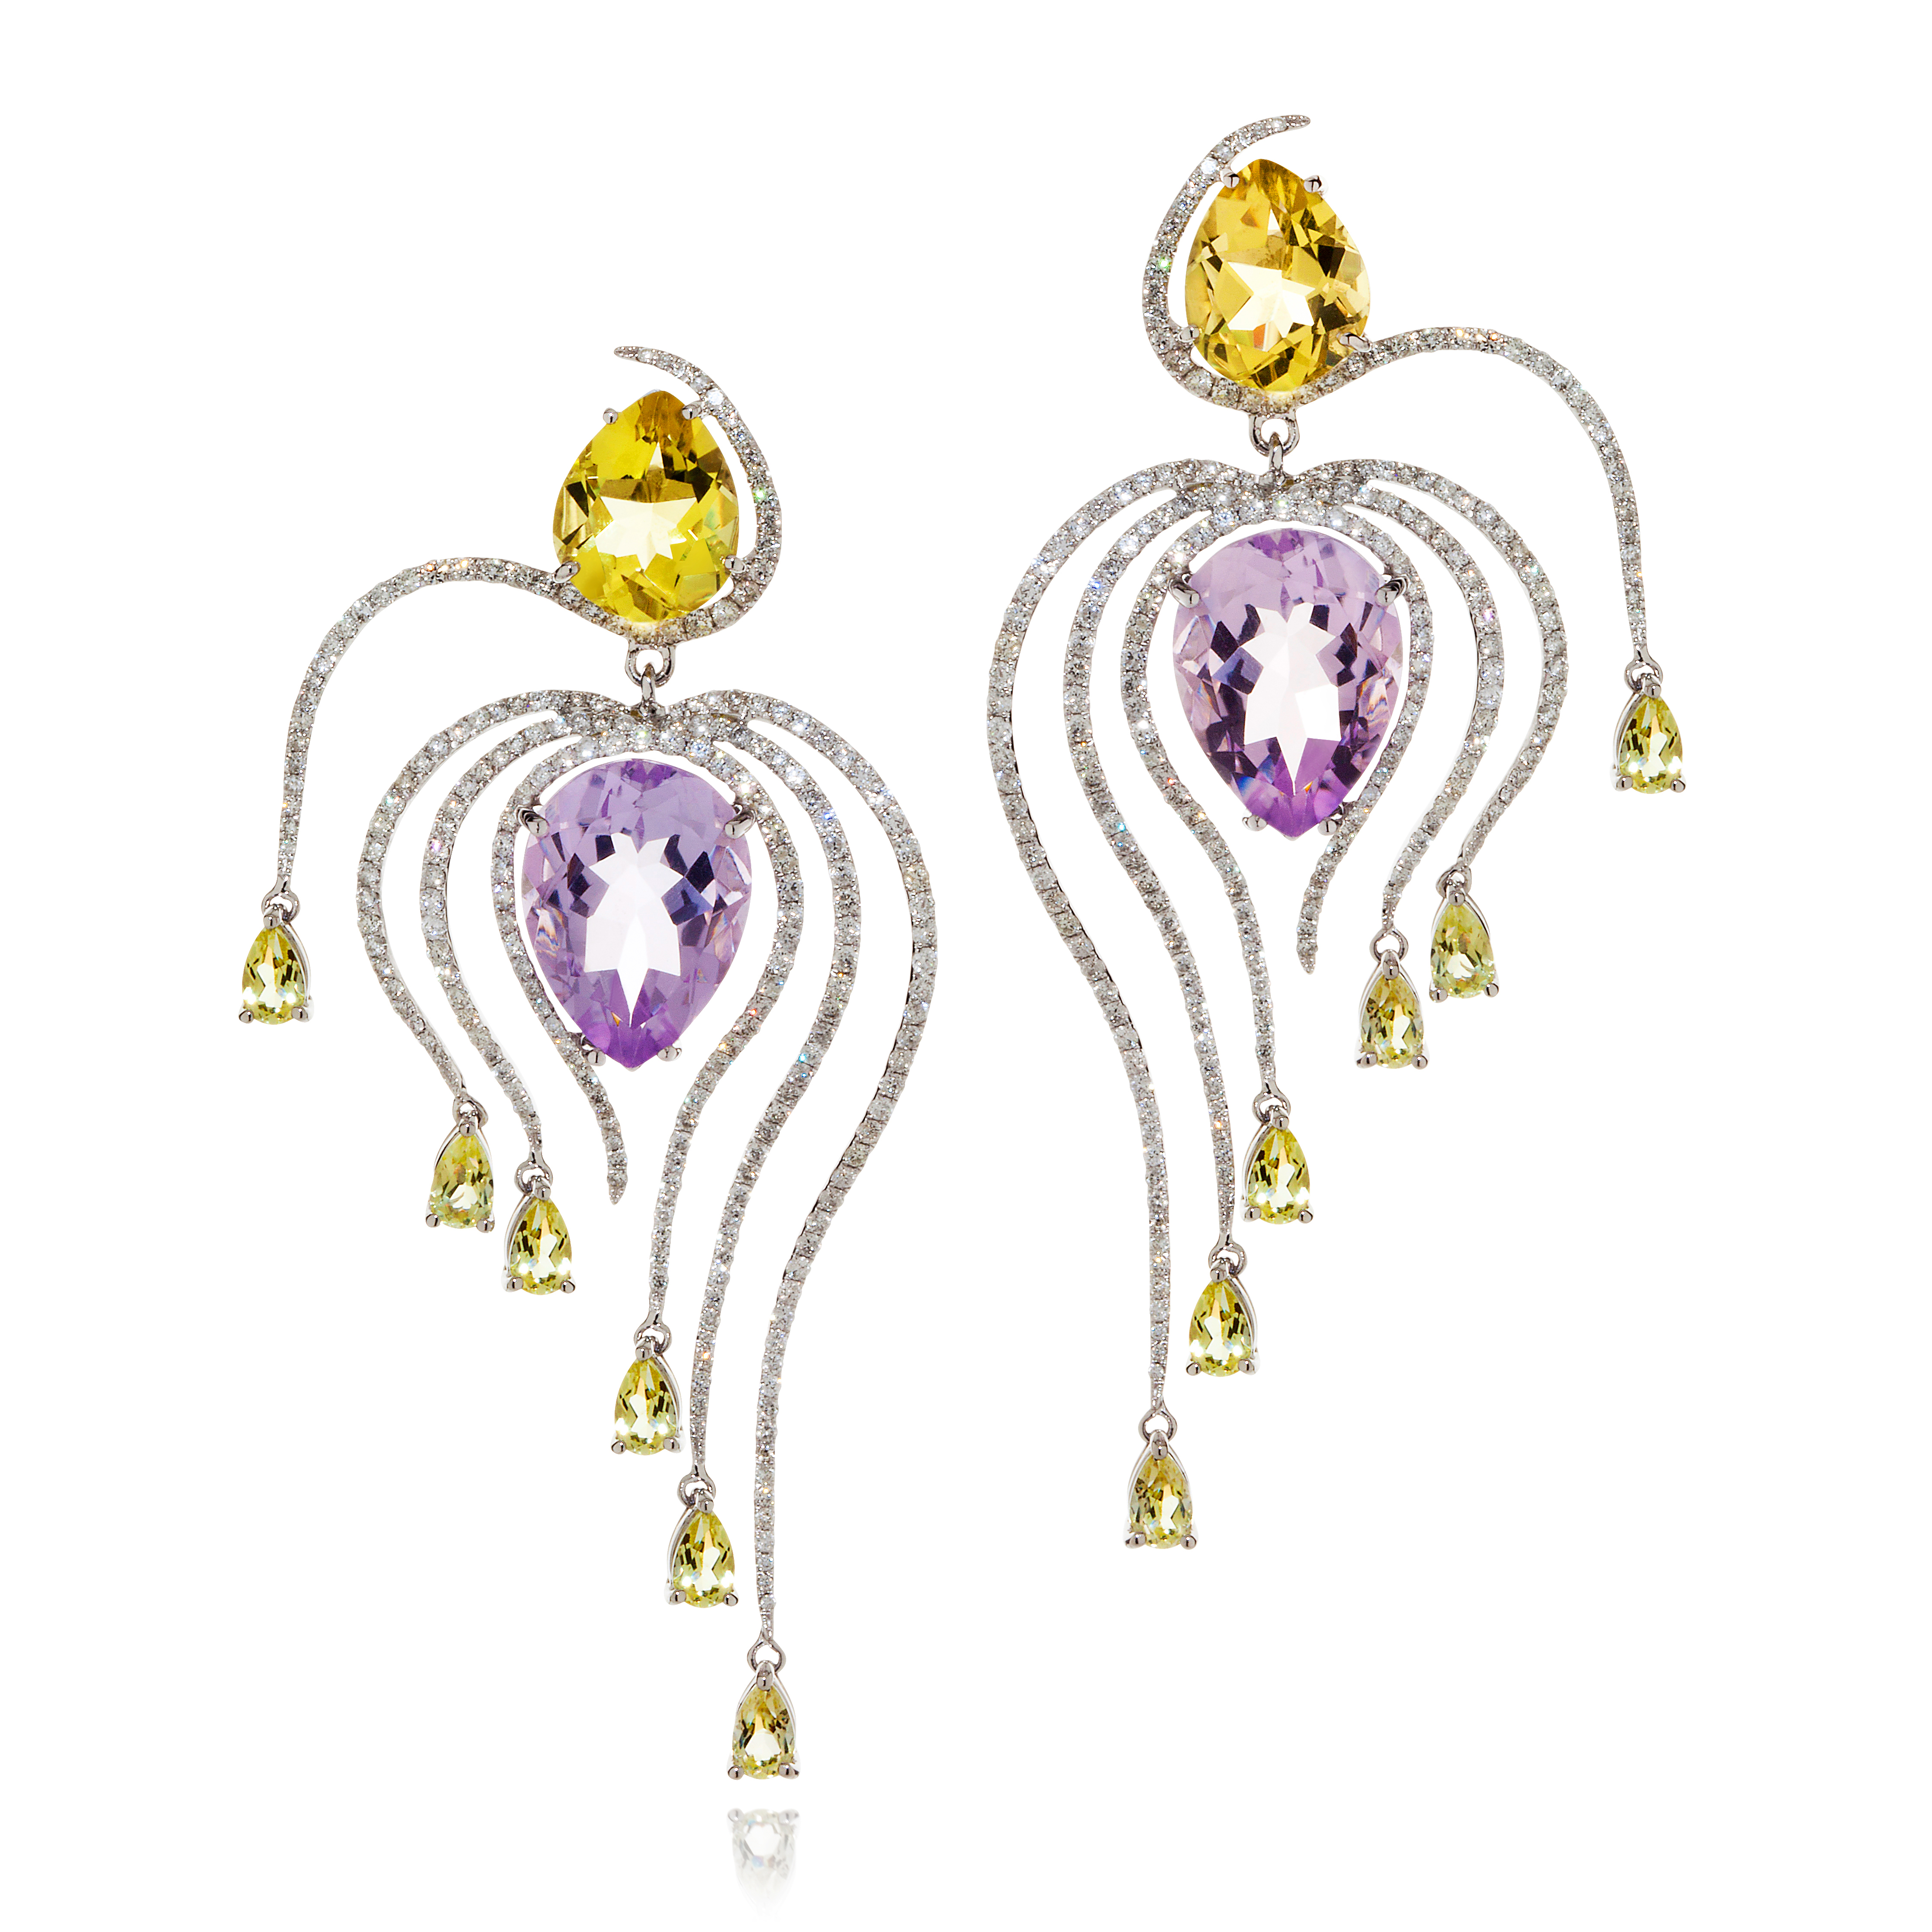 Leyla Abdollahi Hera earings mounted on white gold with diamonds, quartz and amethyst